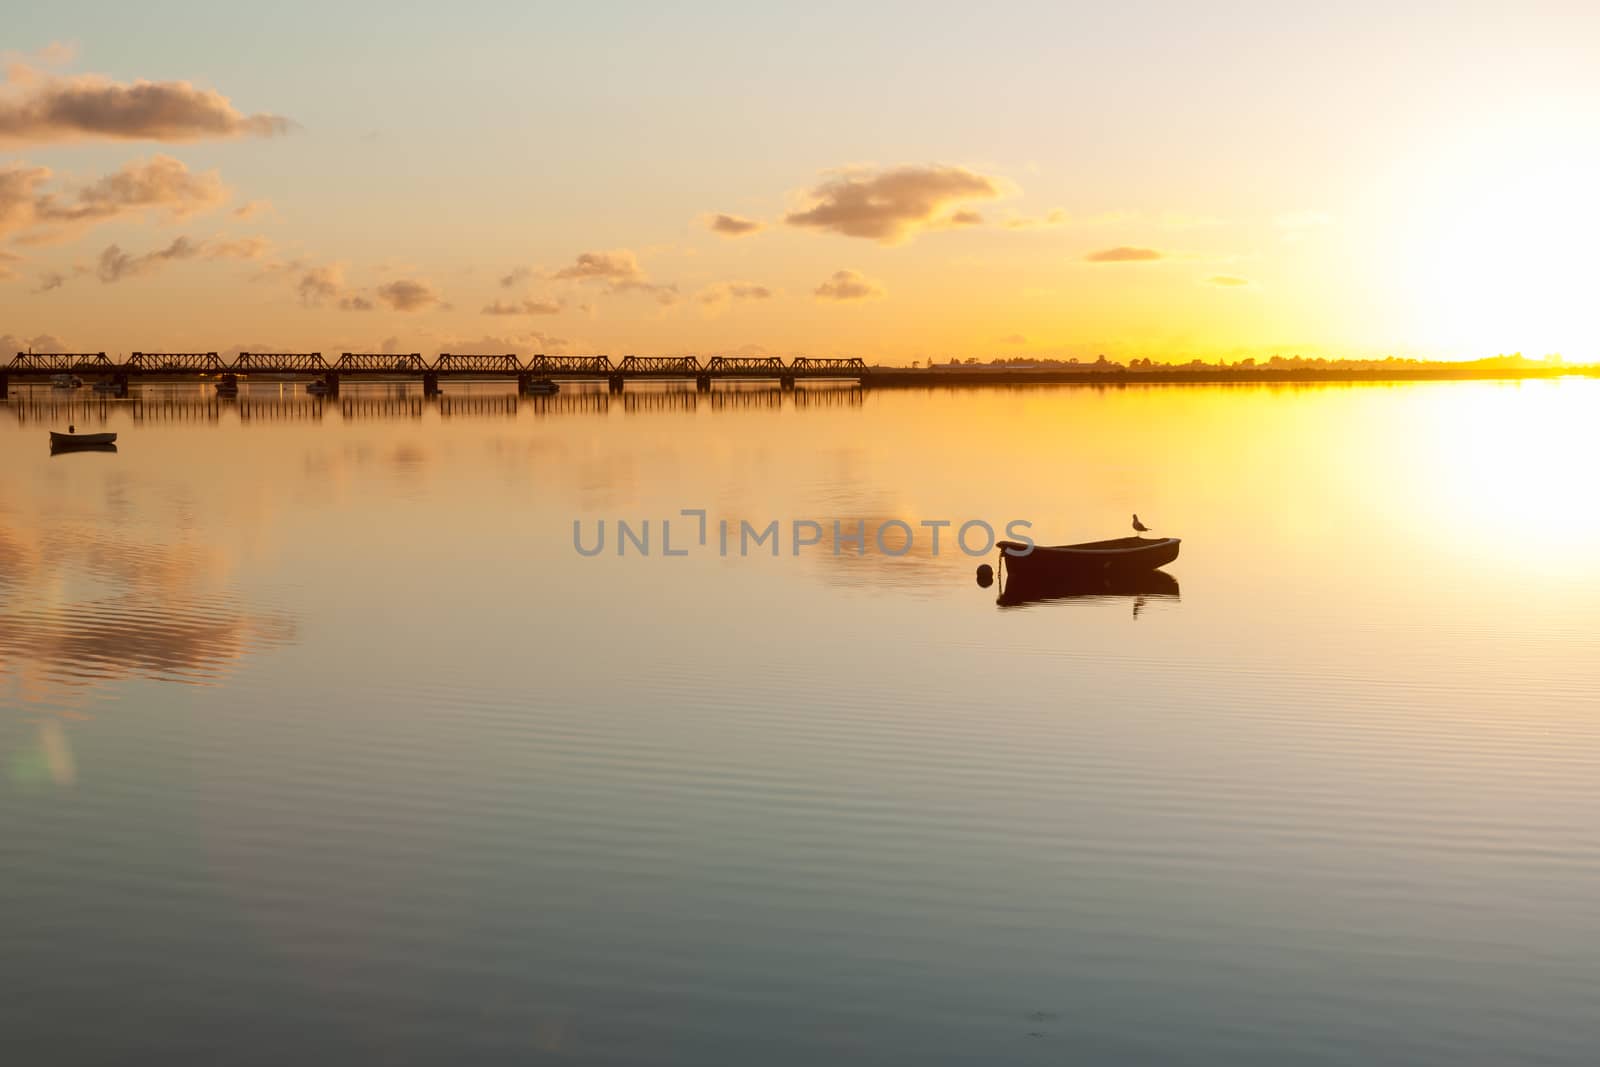 Sunrise and calmness over Tauranga Harbour. Water ripples bird on boat and historic rail bridge on horizon.